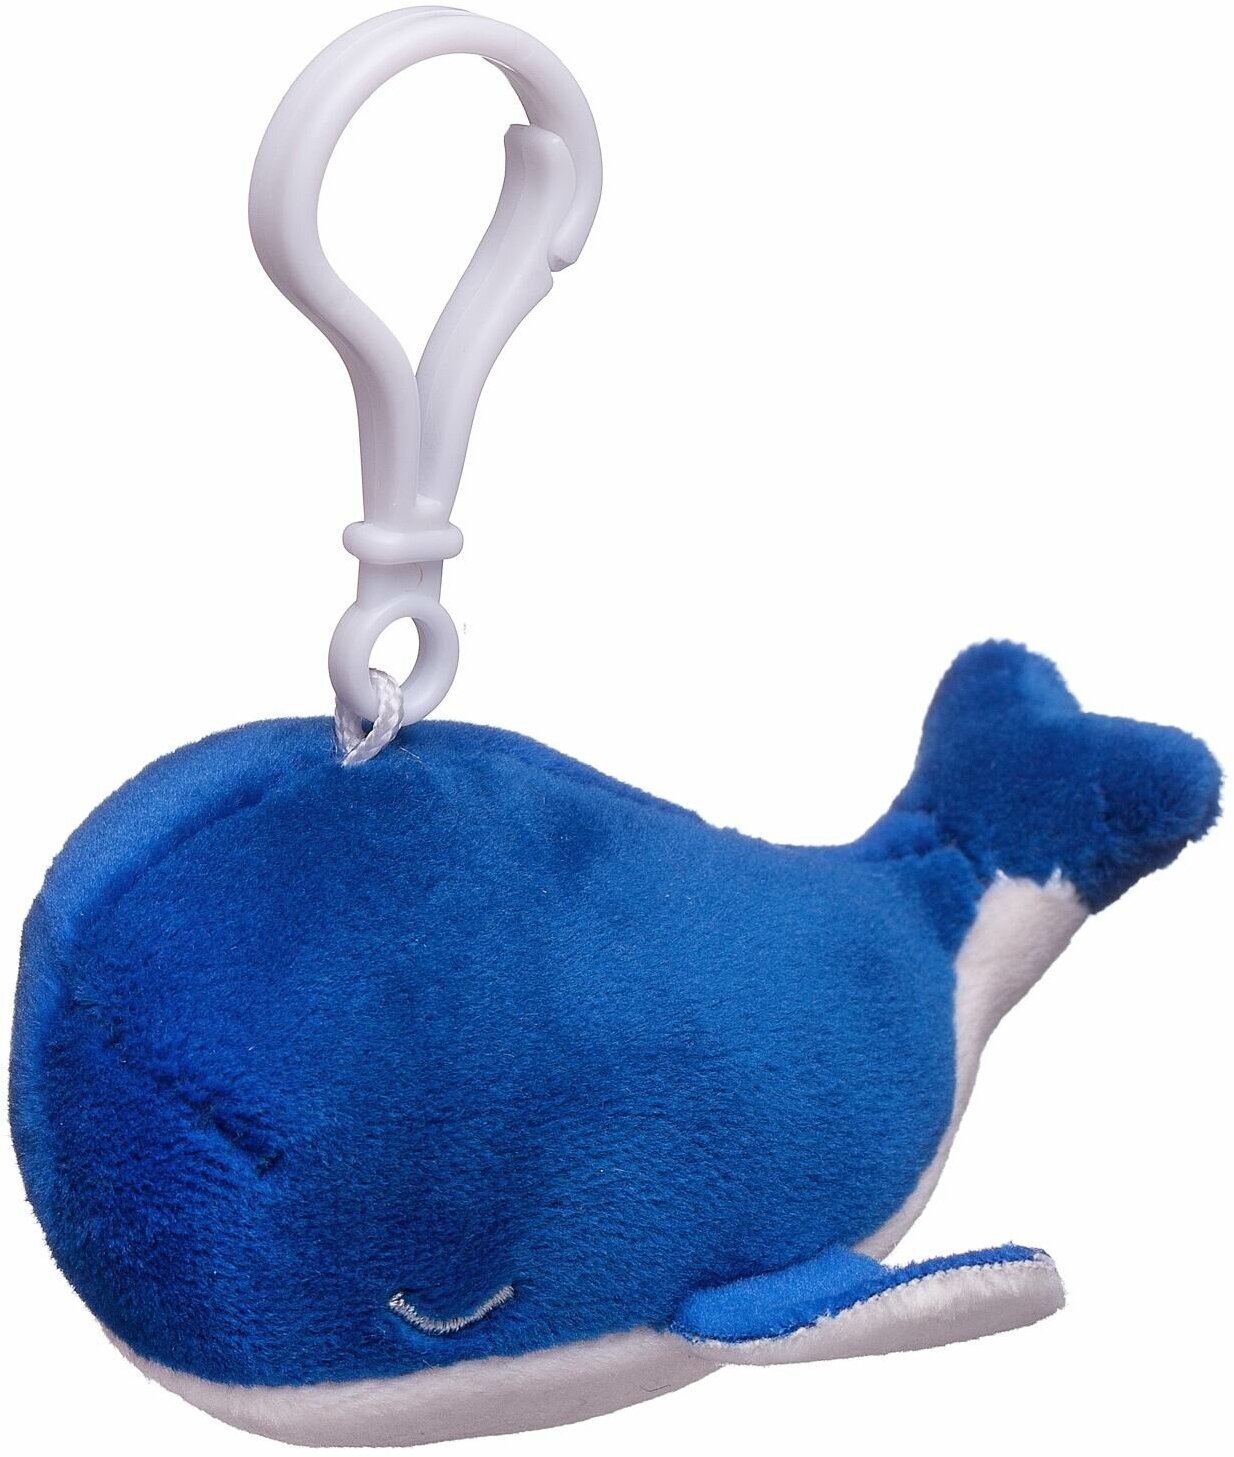 Мягкая игрушка Abtoys Supersoft mini кит, 7см with с пластиковым карабином